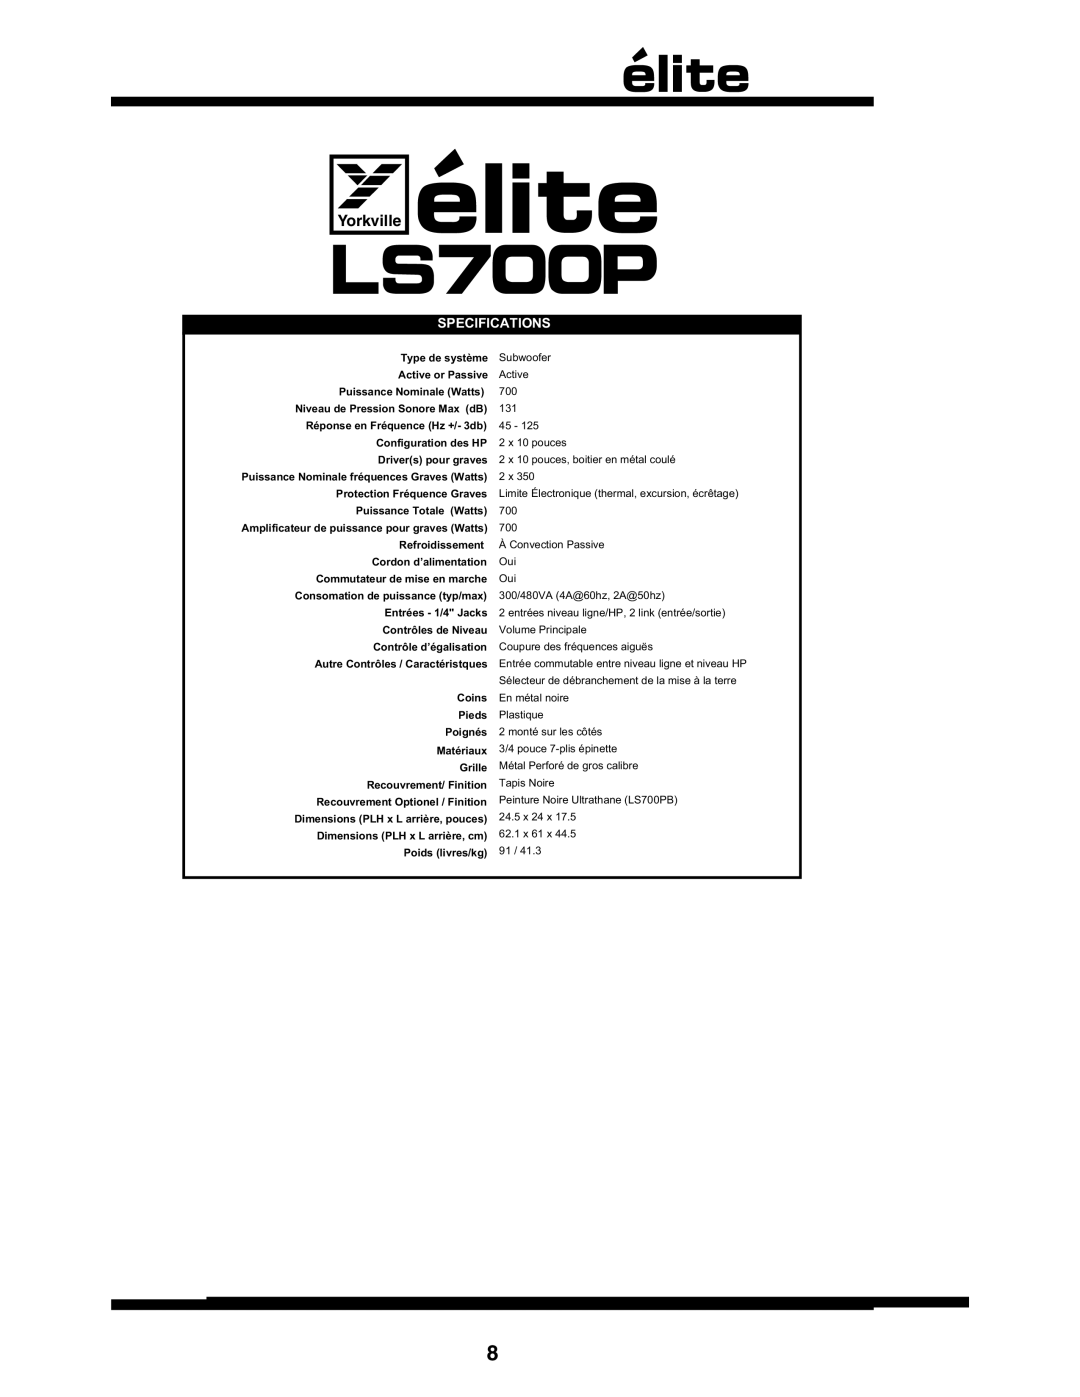 Elite ES700P owner manual LS700P, Yorkville, Specifications 